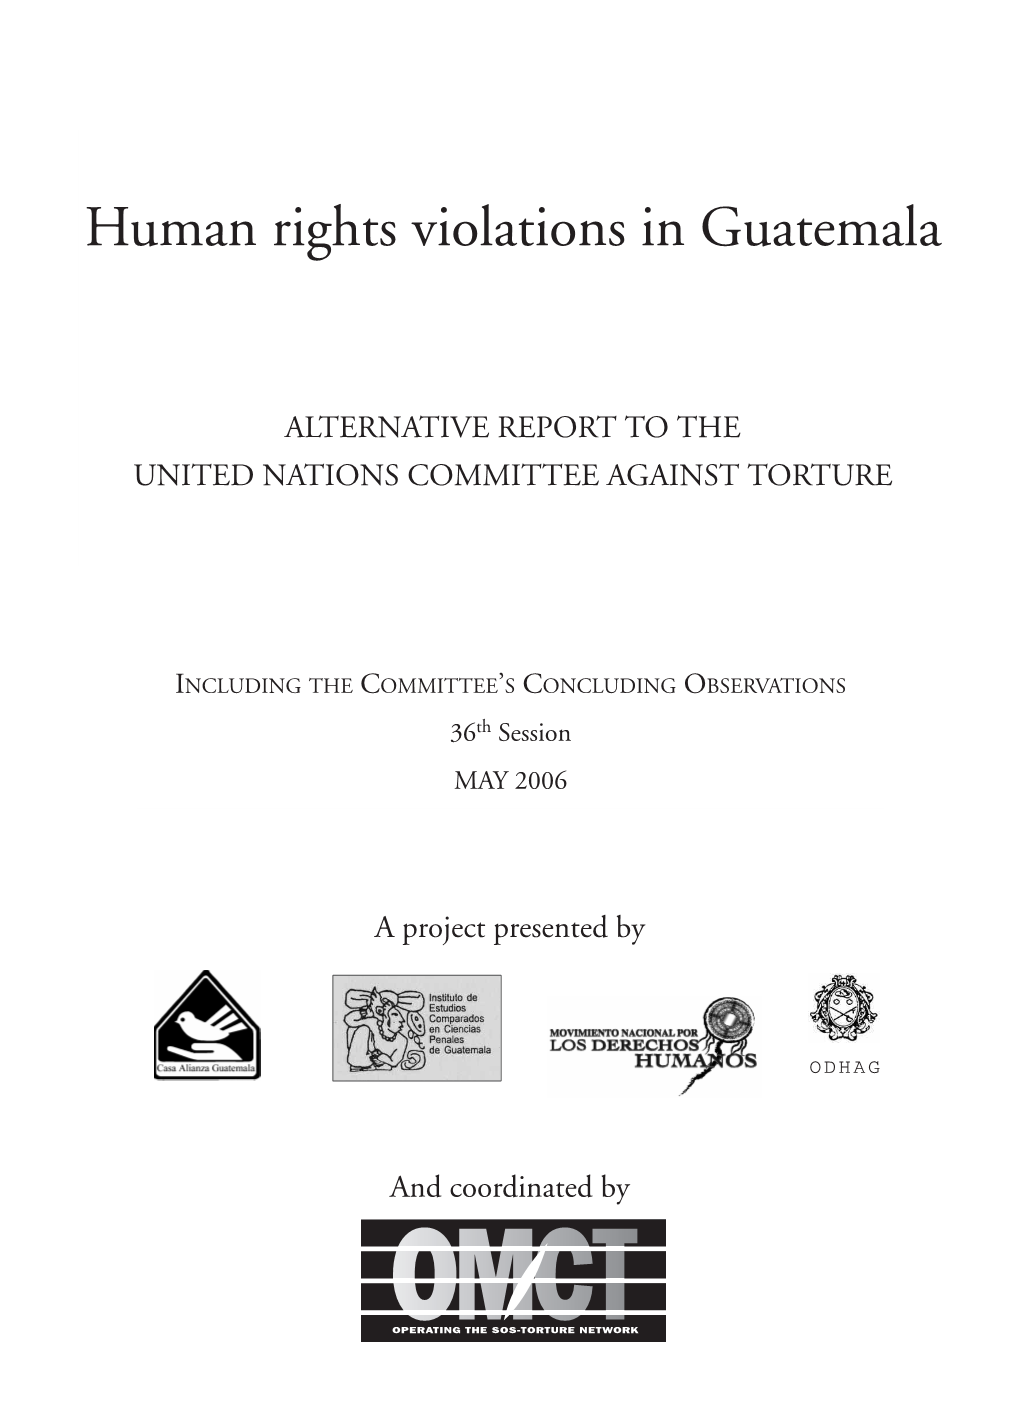 Human Rights Violations in Guatemala